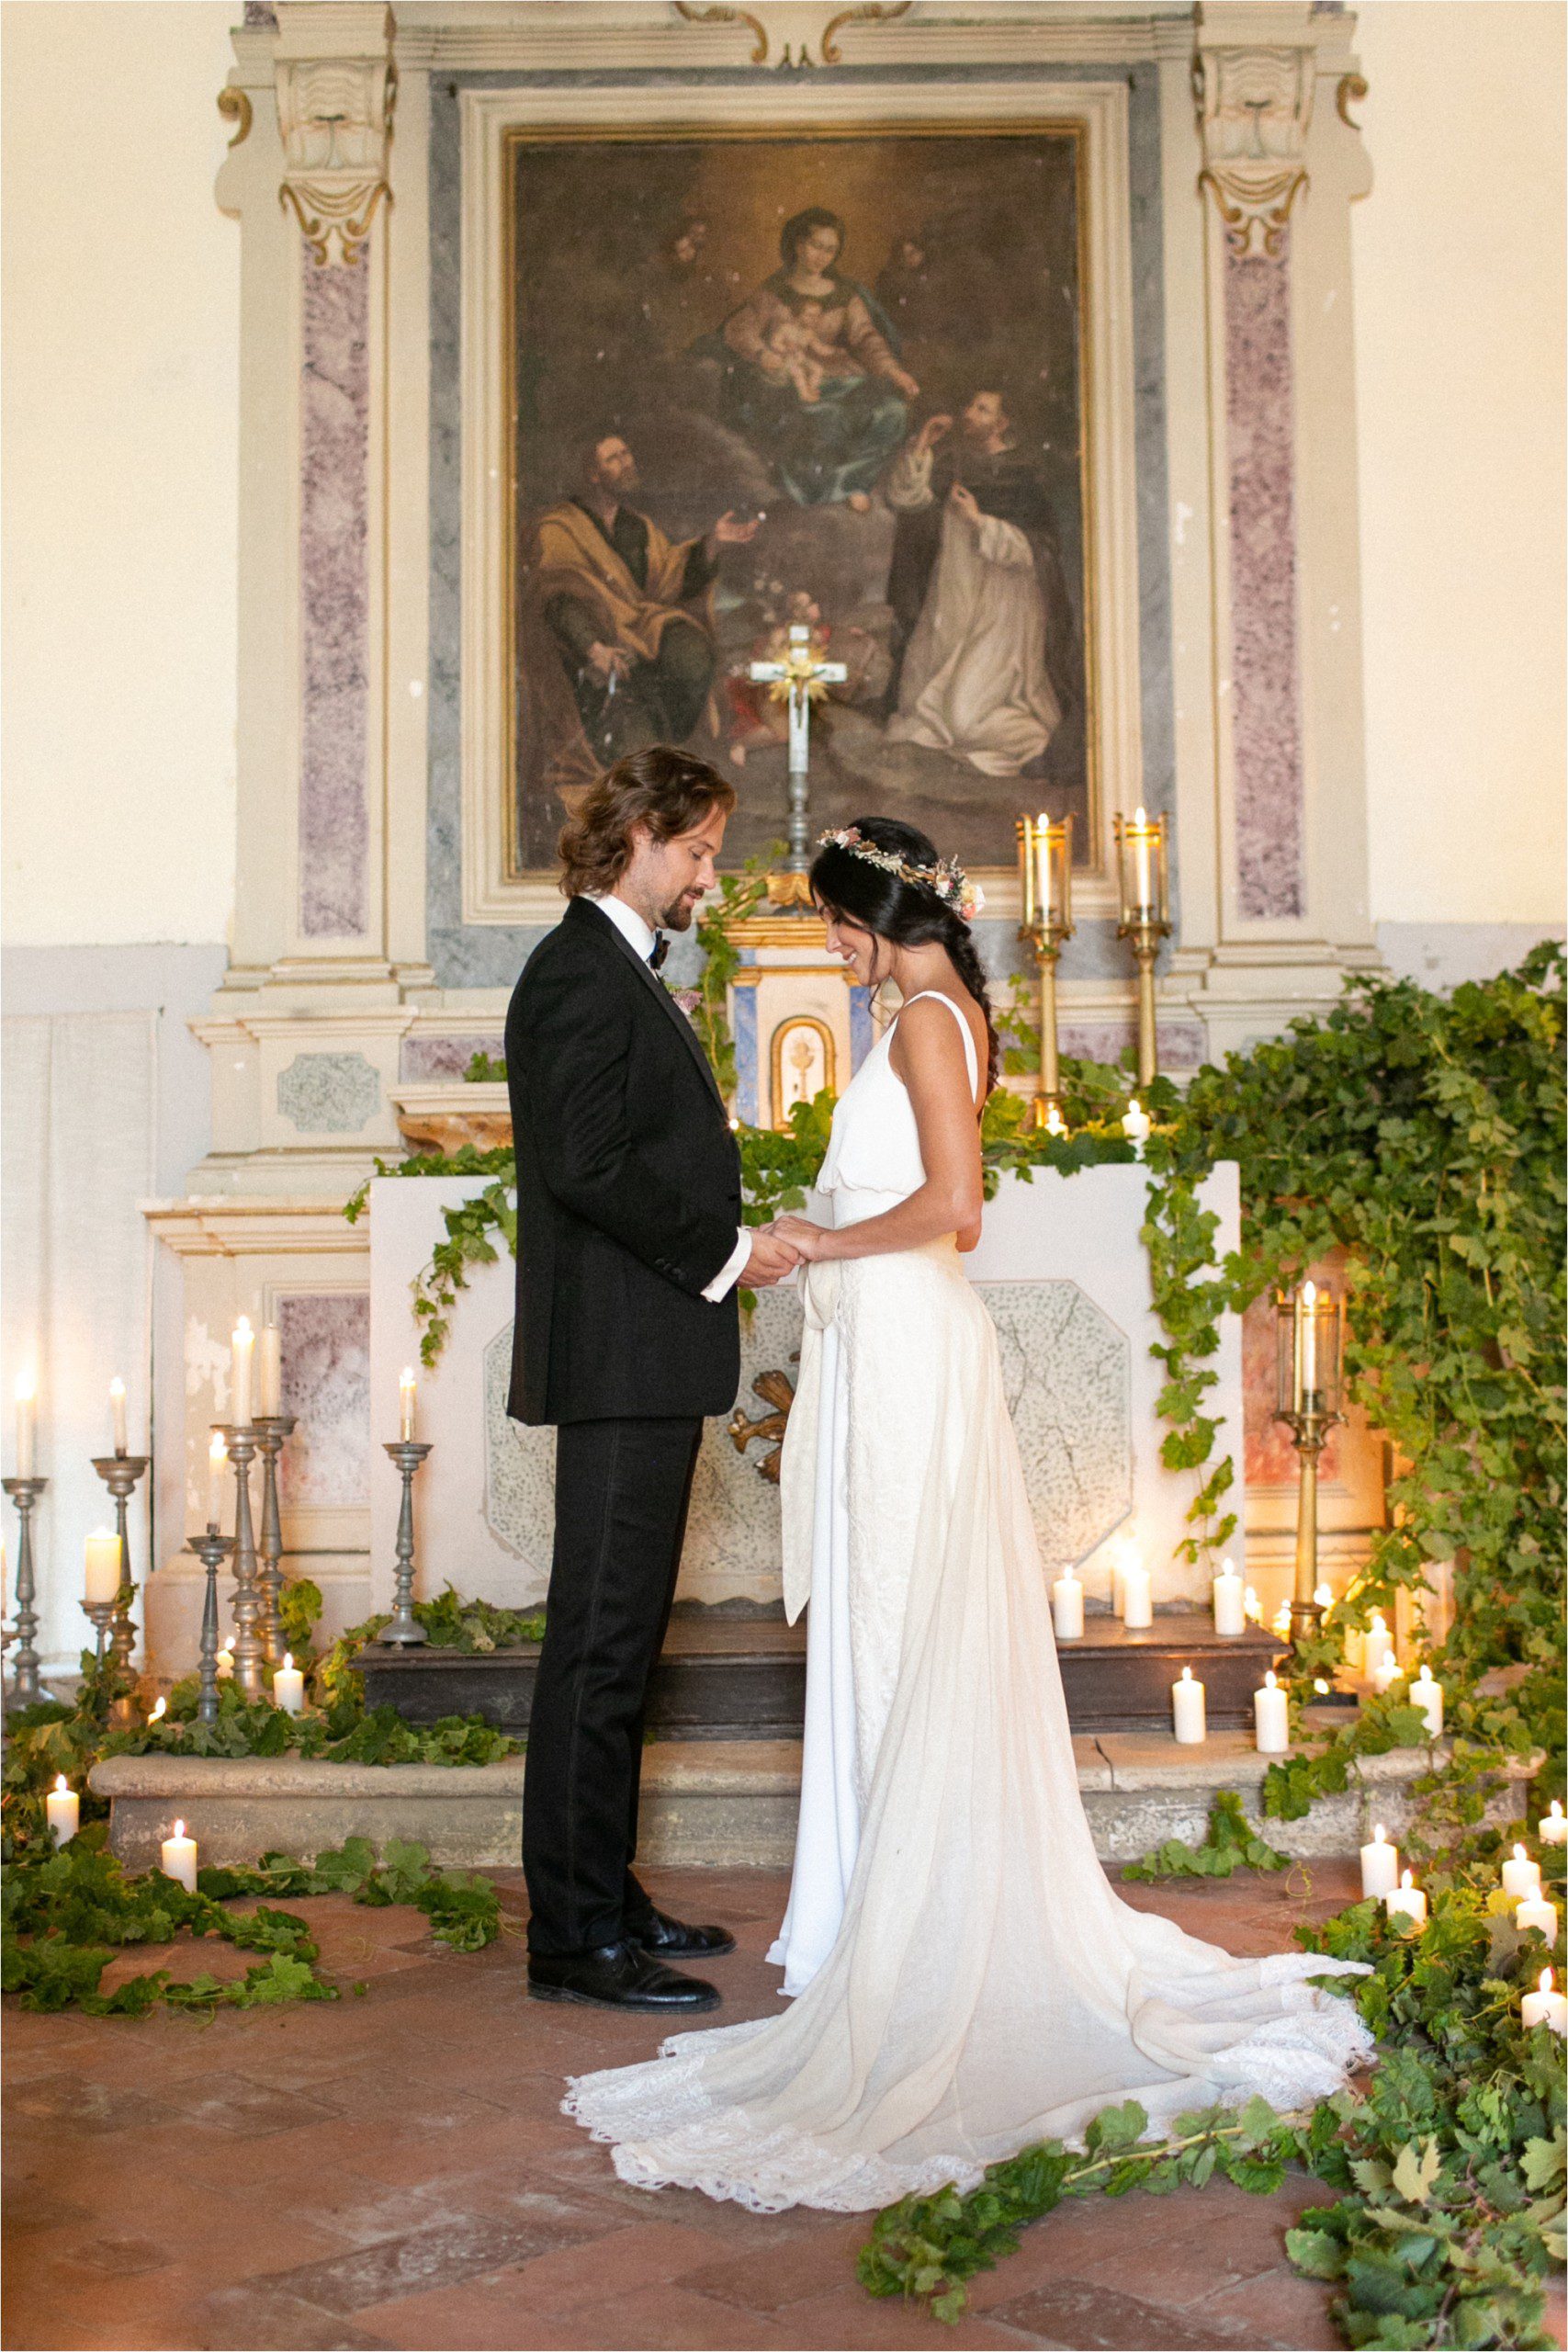 Intimate church wedding at Borgo Pignano